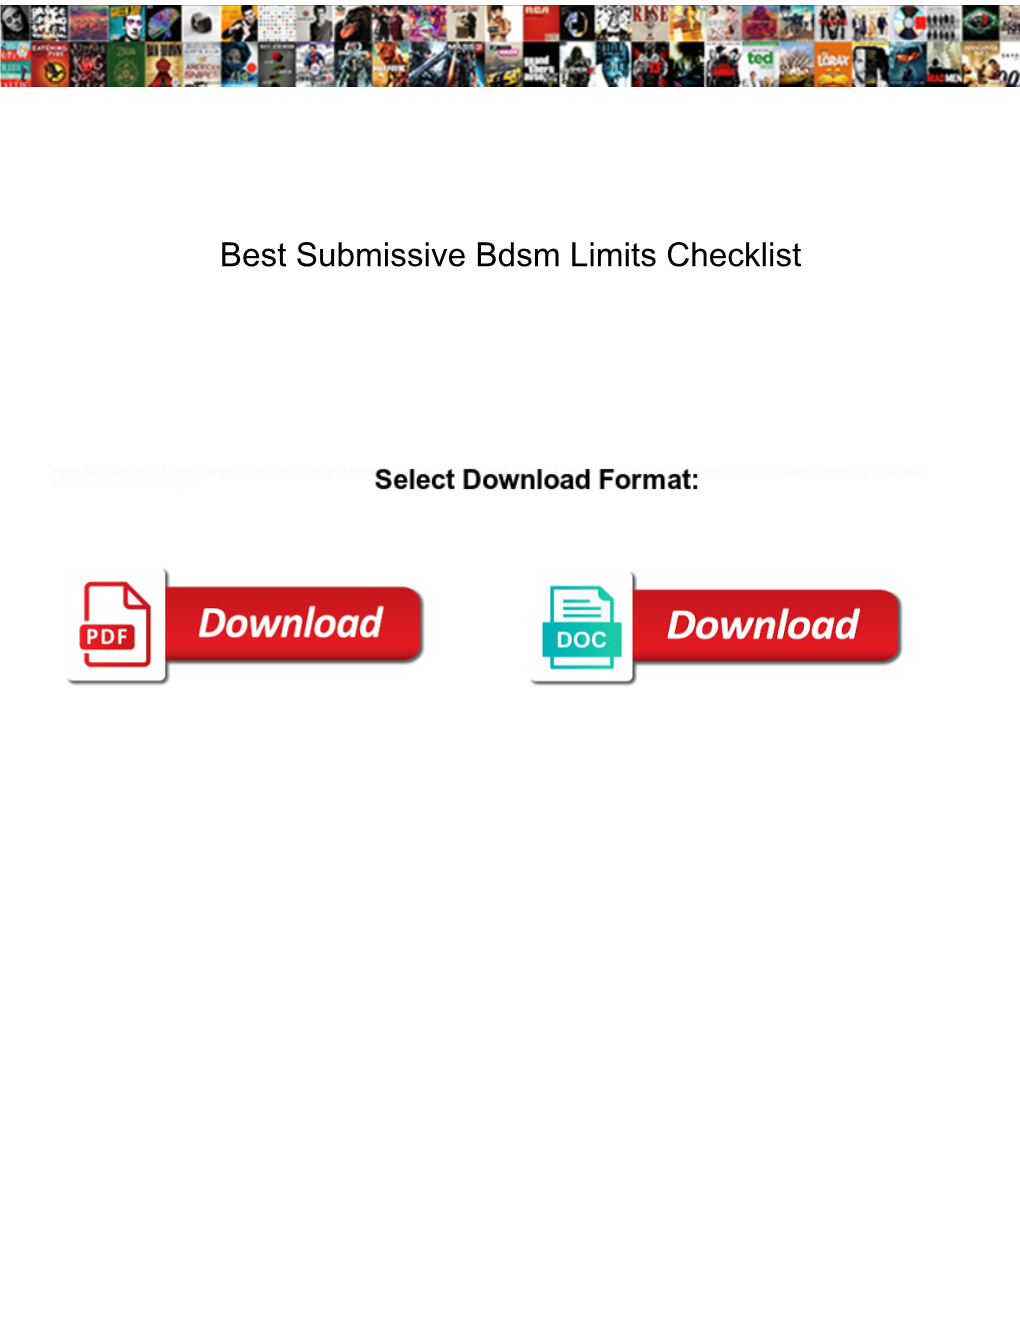 Best Submissive Bdsm Limits Checklist